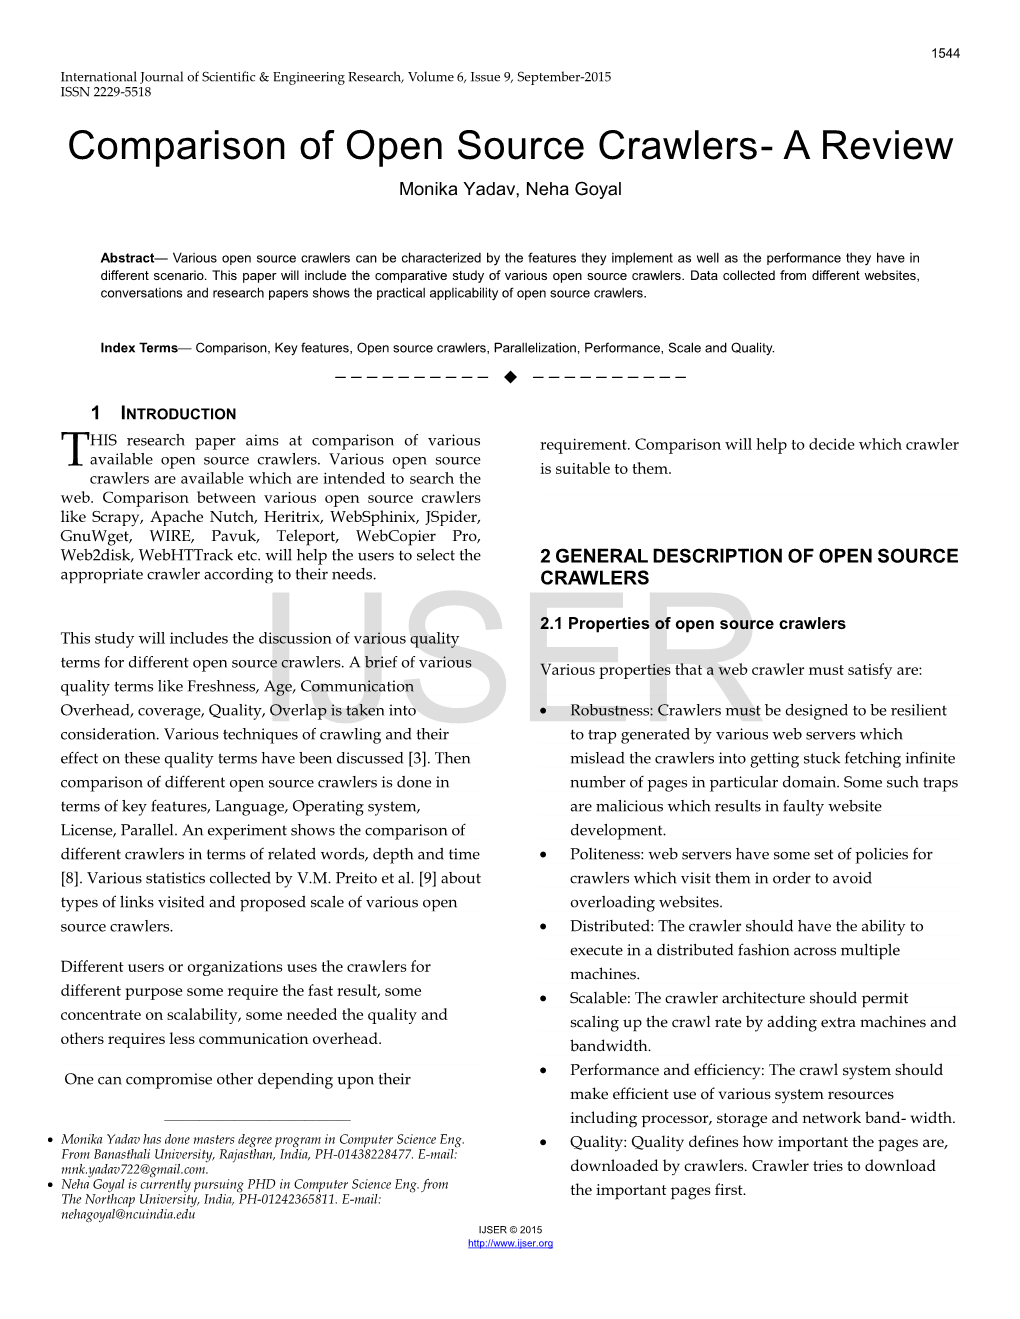 Comparison of Open Source Crawlers- a Review Monika Yadav, Neha Goyal